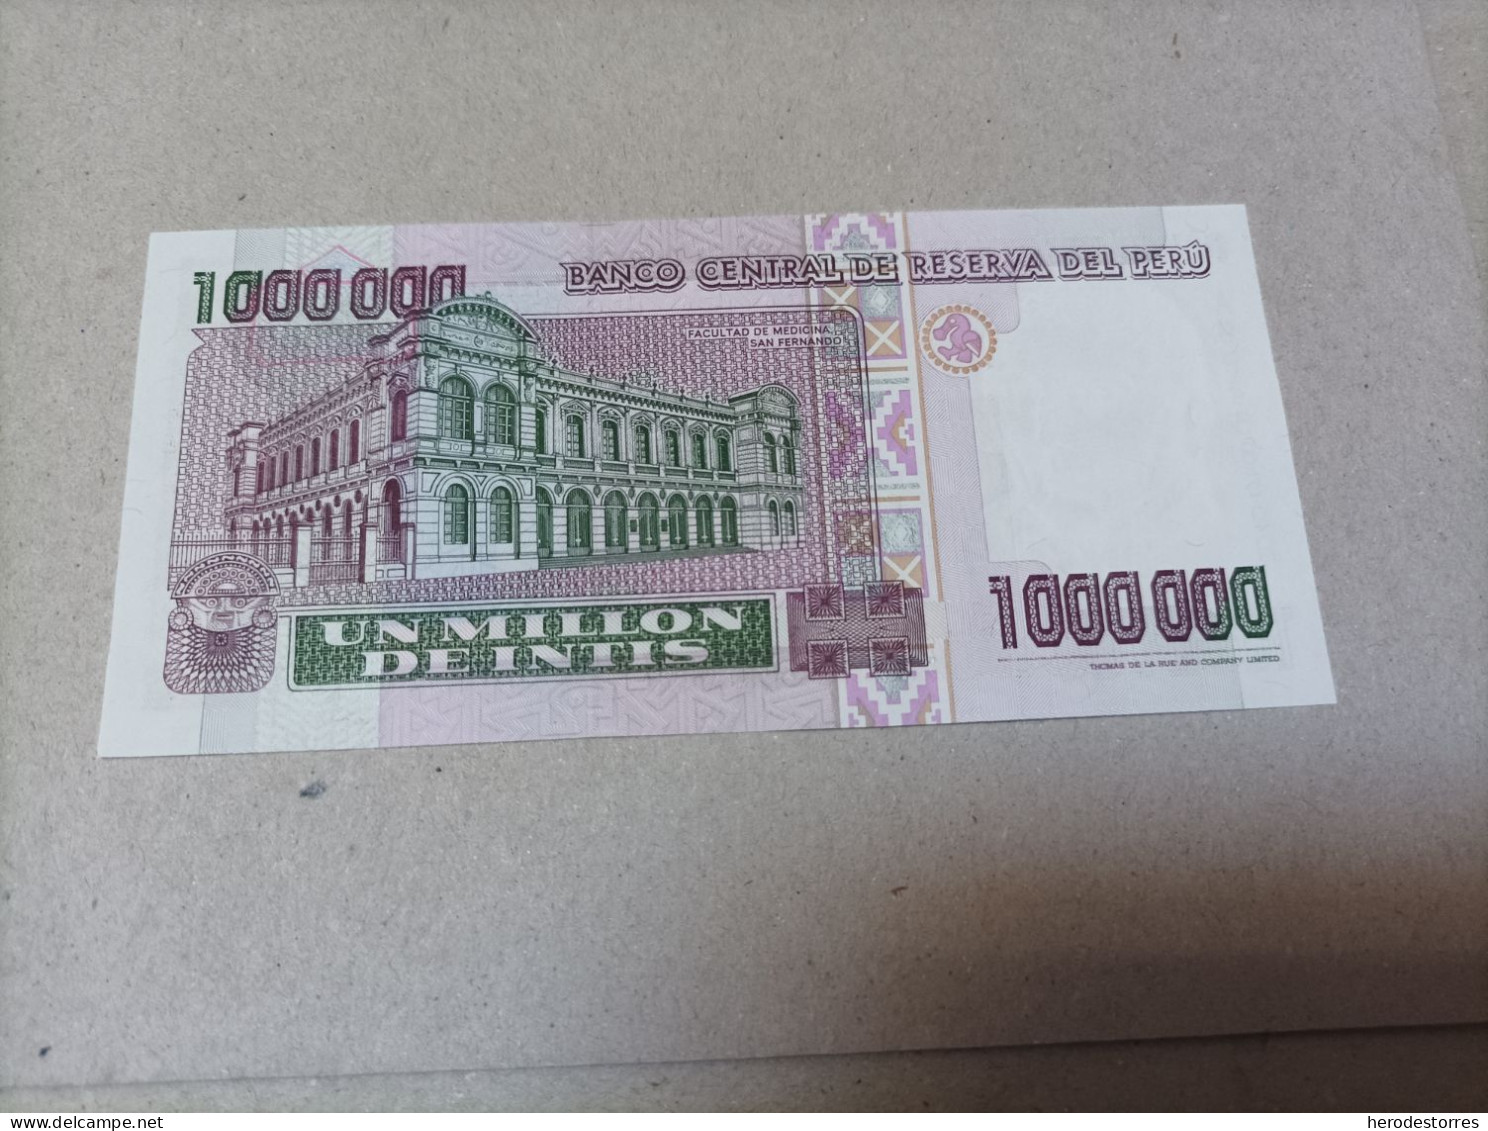 Billete Perú, 1000000 Intis, Año 1990, AUNC - Pérou